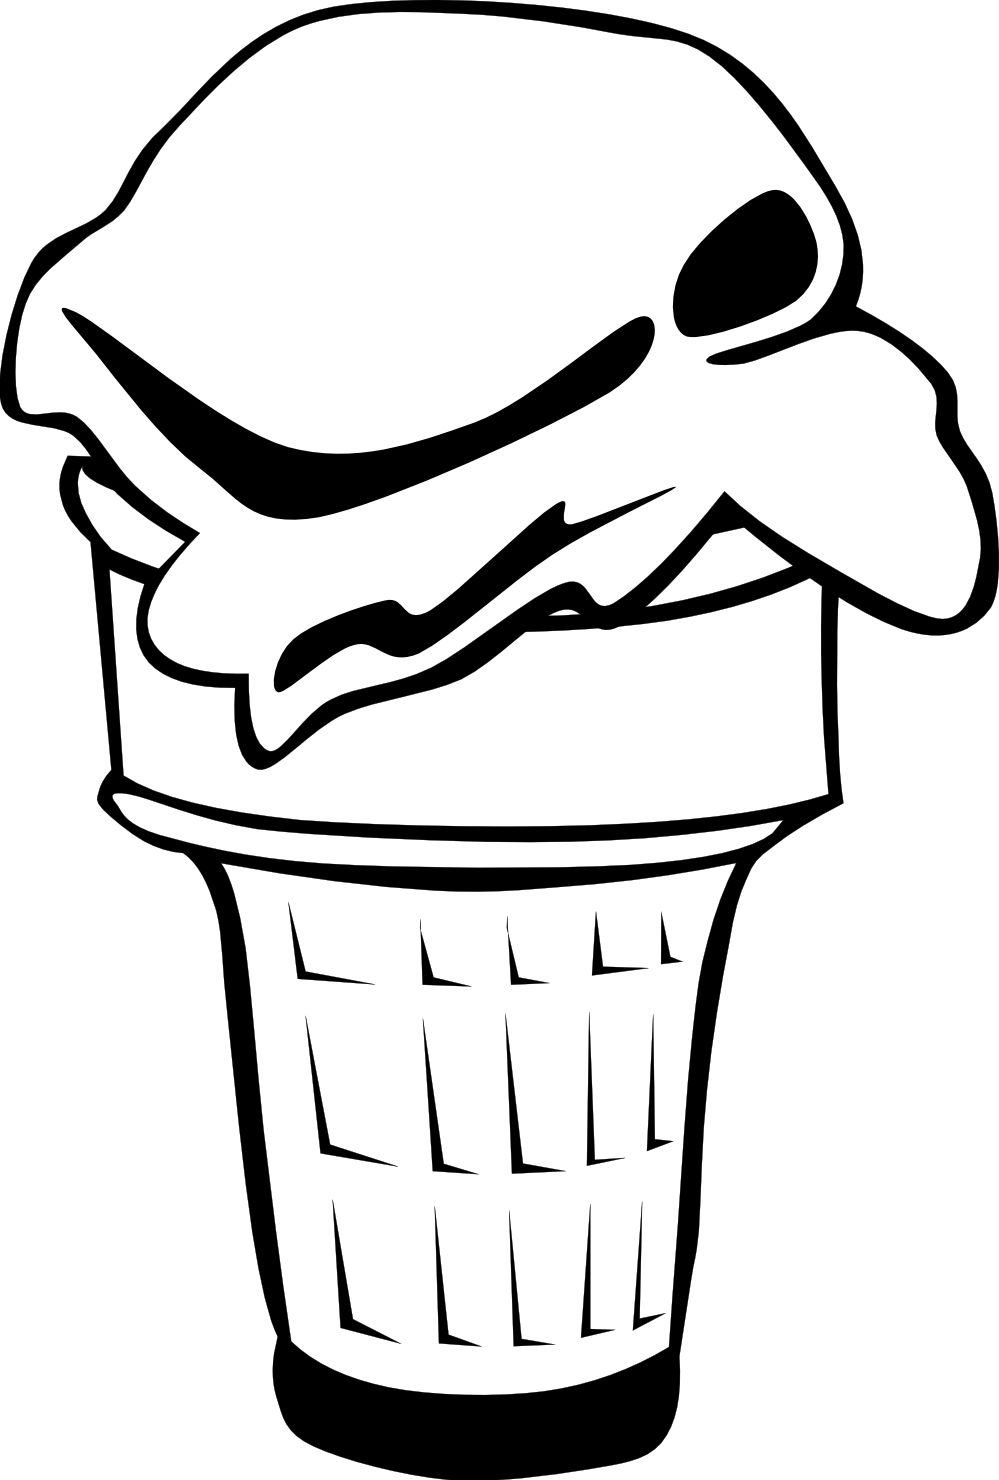 Pix For > Ice Cream Social Clip Art Black And White